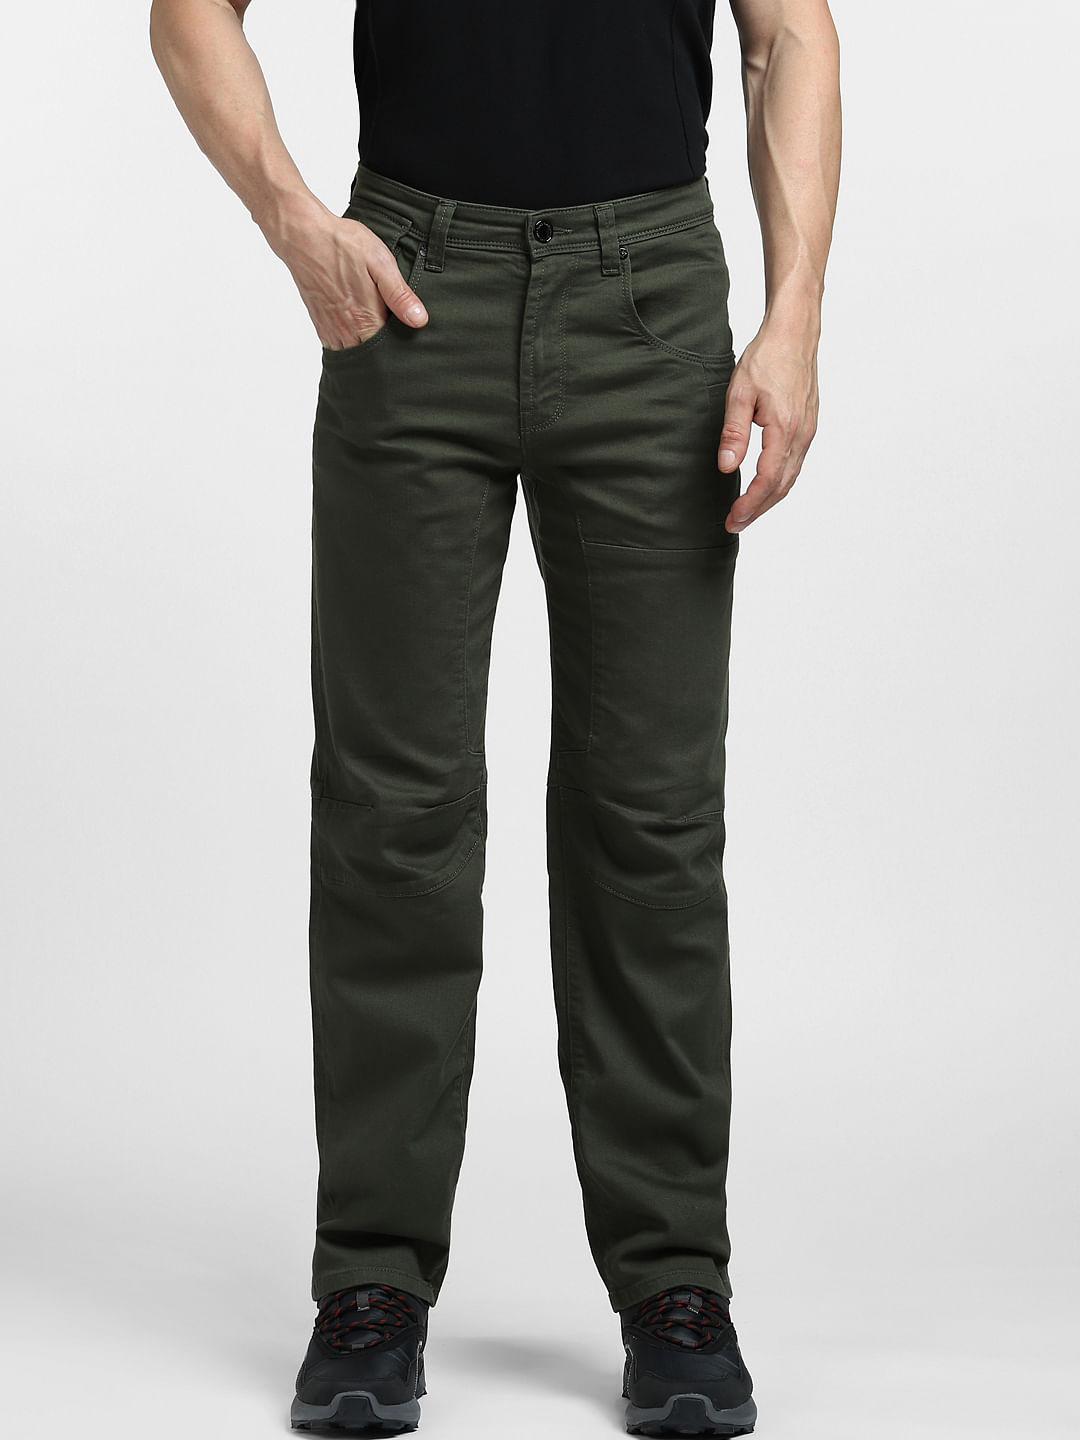 Bootcut Cargo Pants Men | Mens Boot Cut Cargo Pants | Boot Cut Trousers Mens  - Casual - Aliexpress